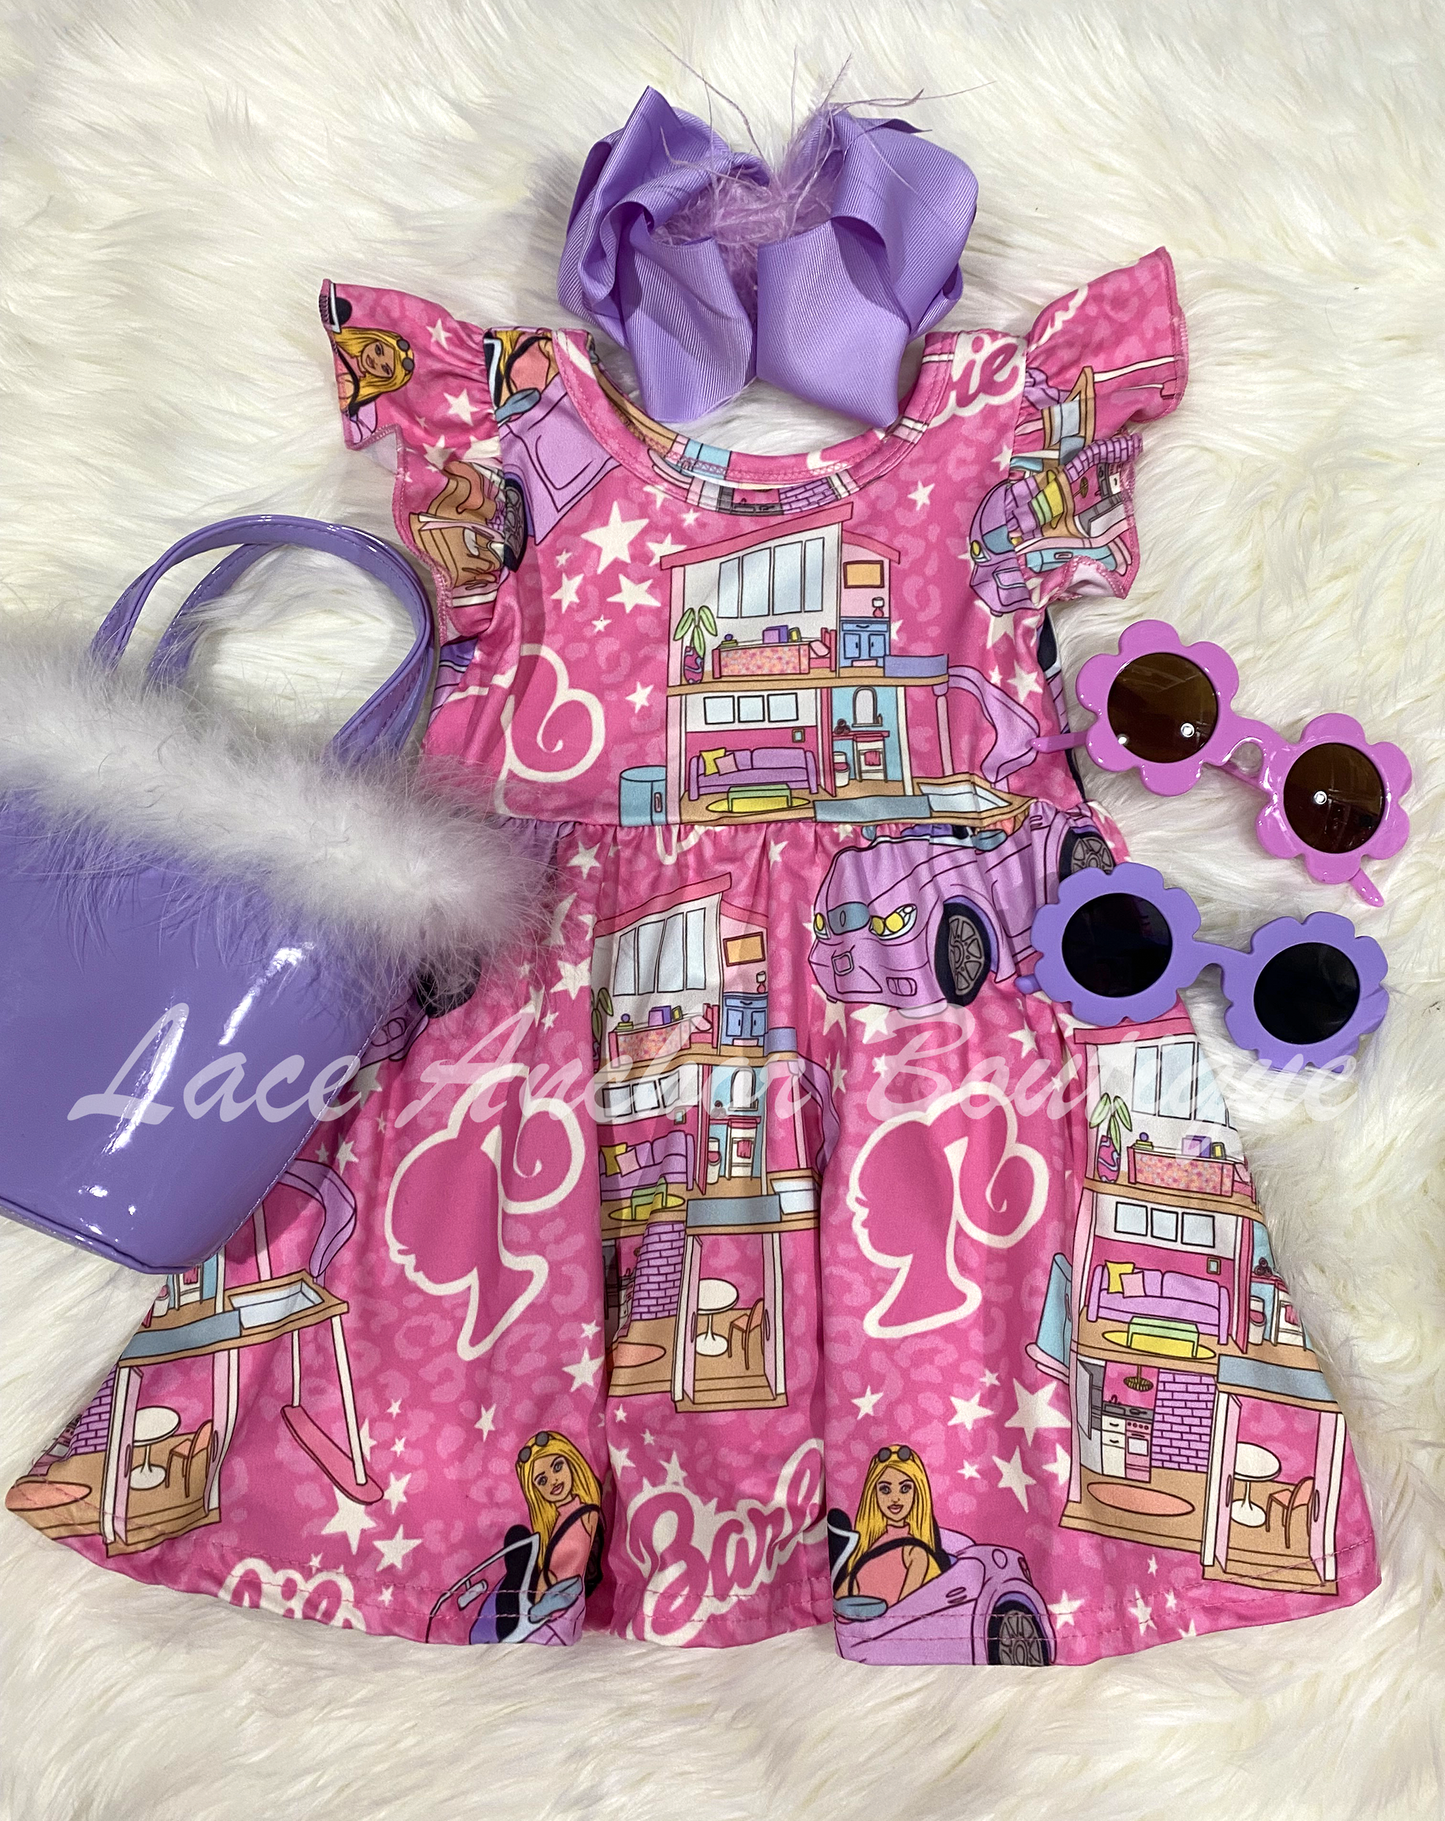 Toddler Child Retro Barbie Girl Pink Dress - Kids Vintage Girly Hot Pink Twirl Dress